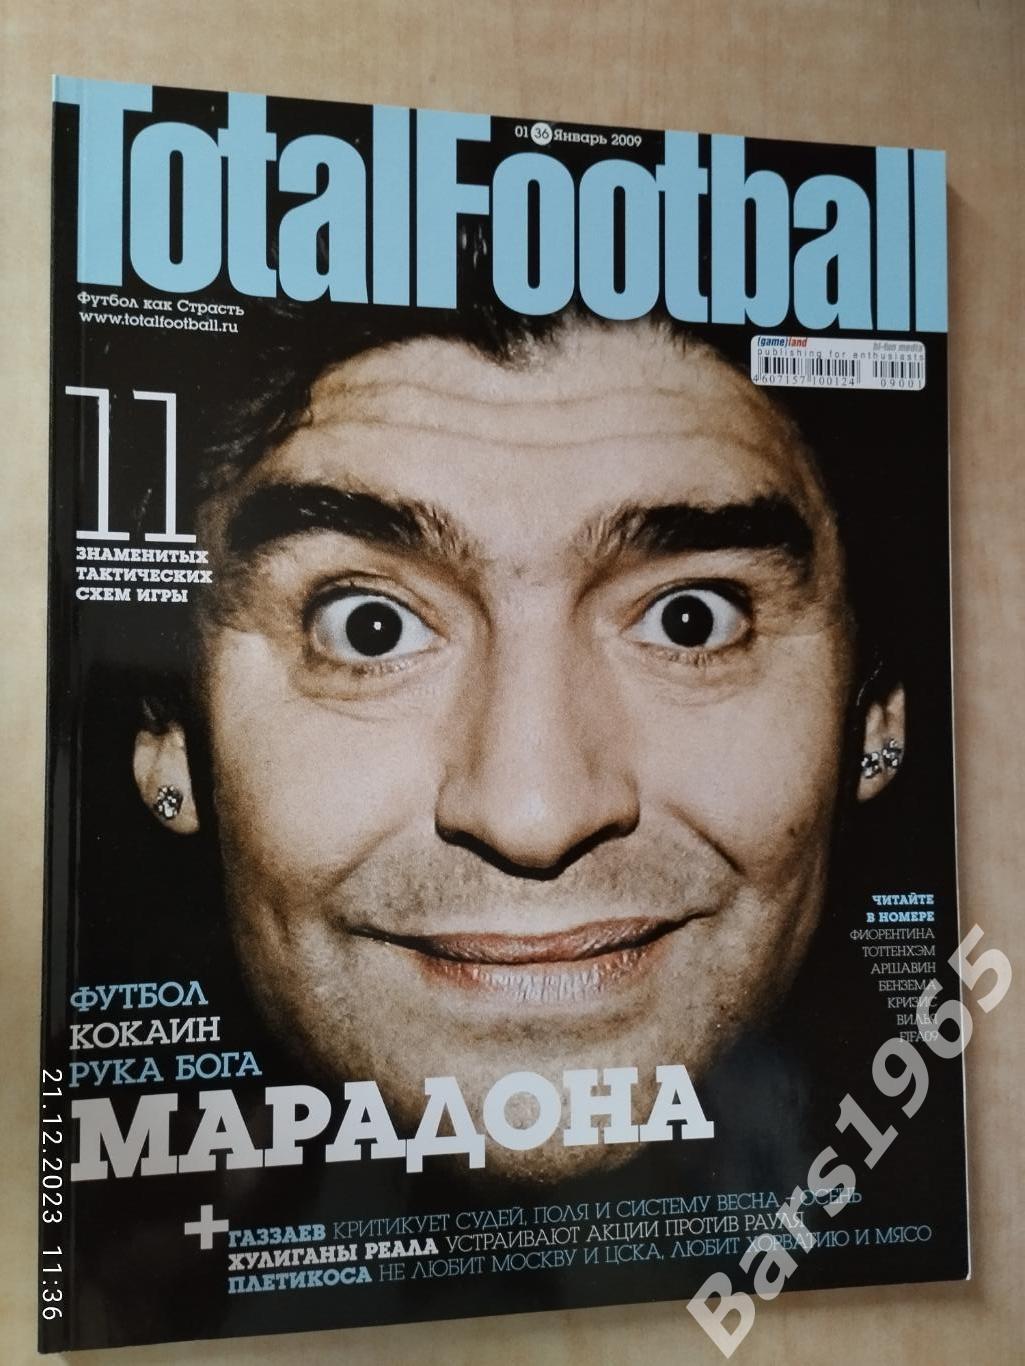 Total Football № 1 (36) 2009 с постером